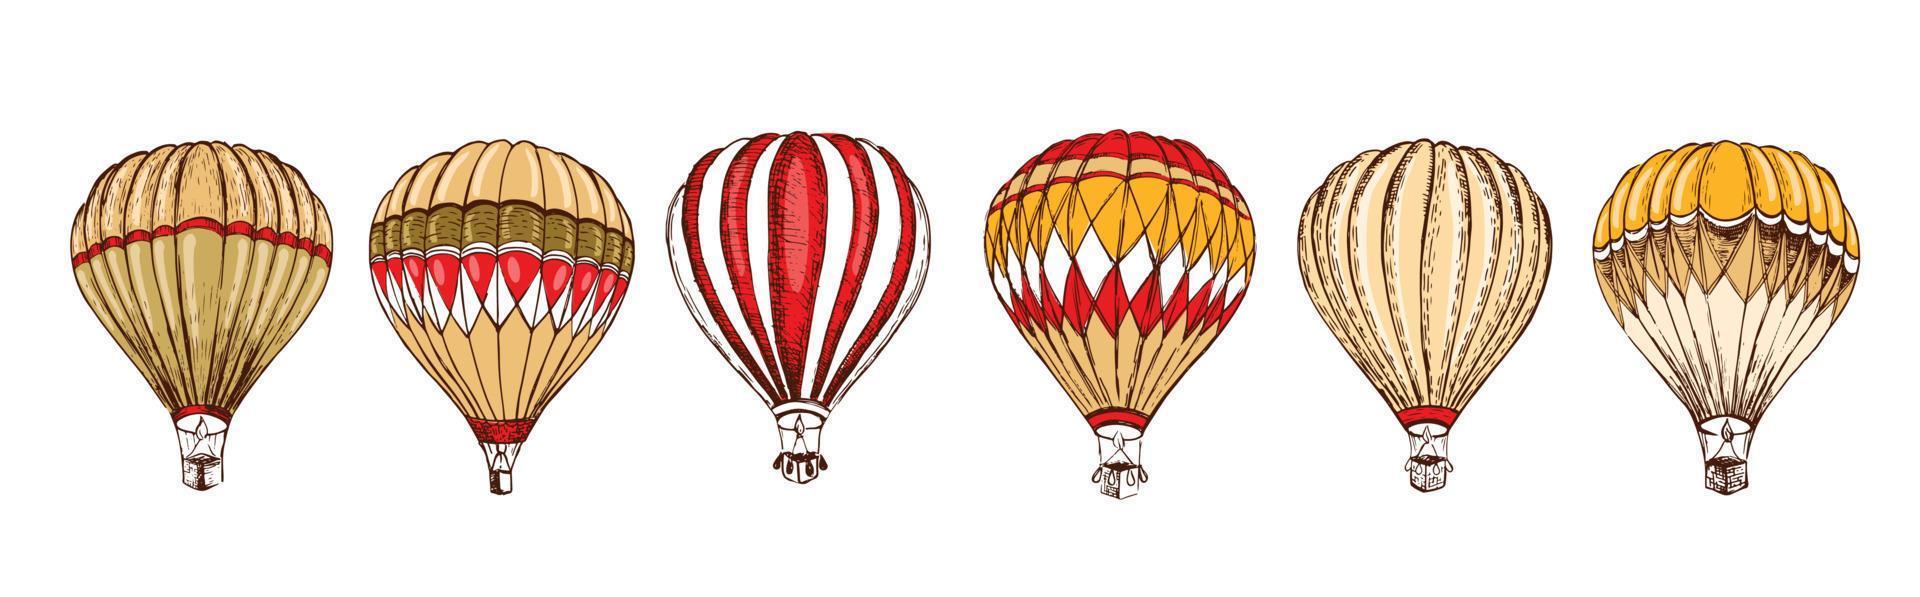 Hot air balloons flying. Hand drawn illustration vector